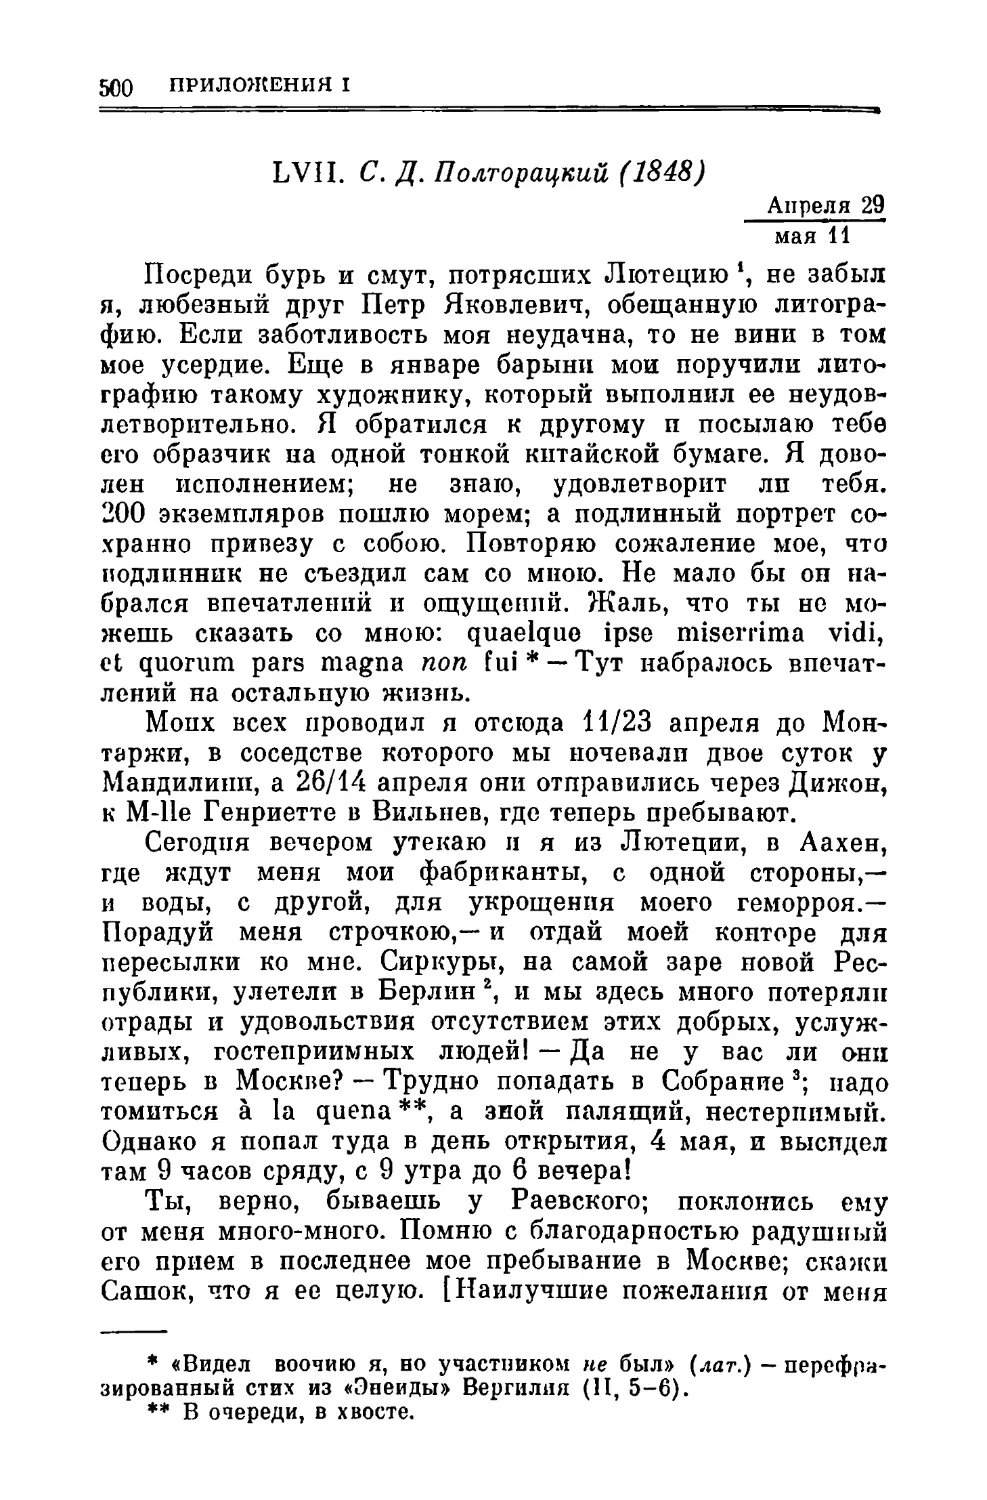 LVII. Полторацкий С.Д. 29.IV/11.V.1848